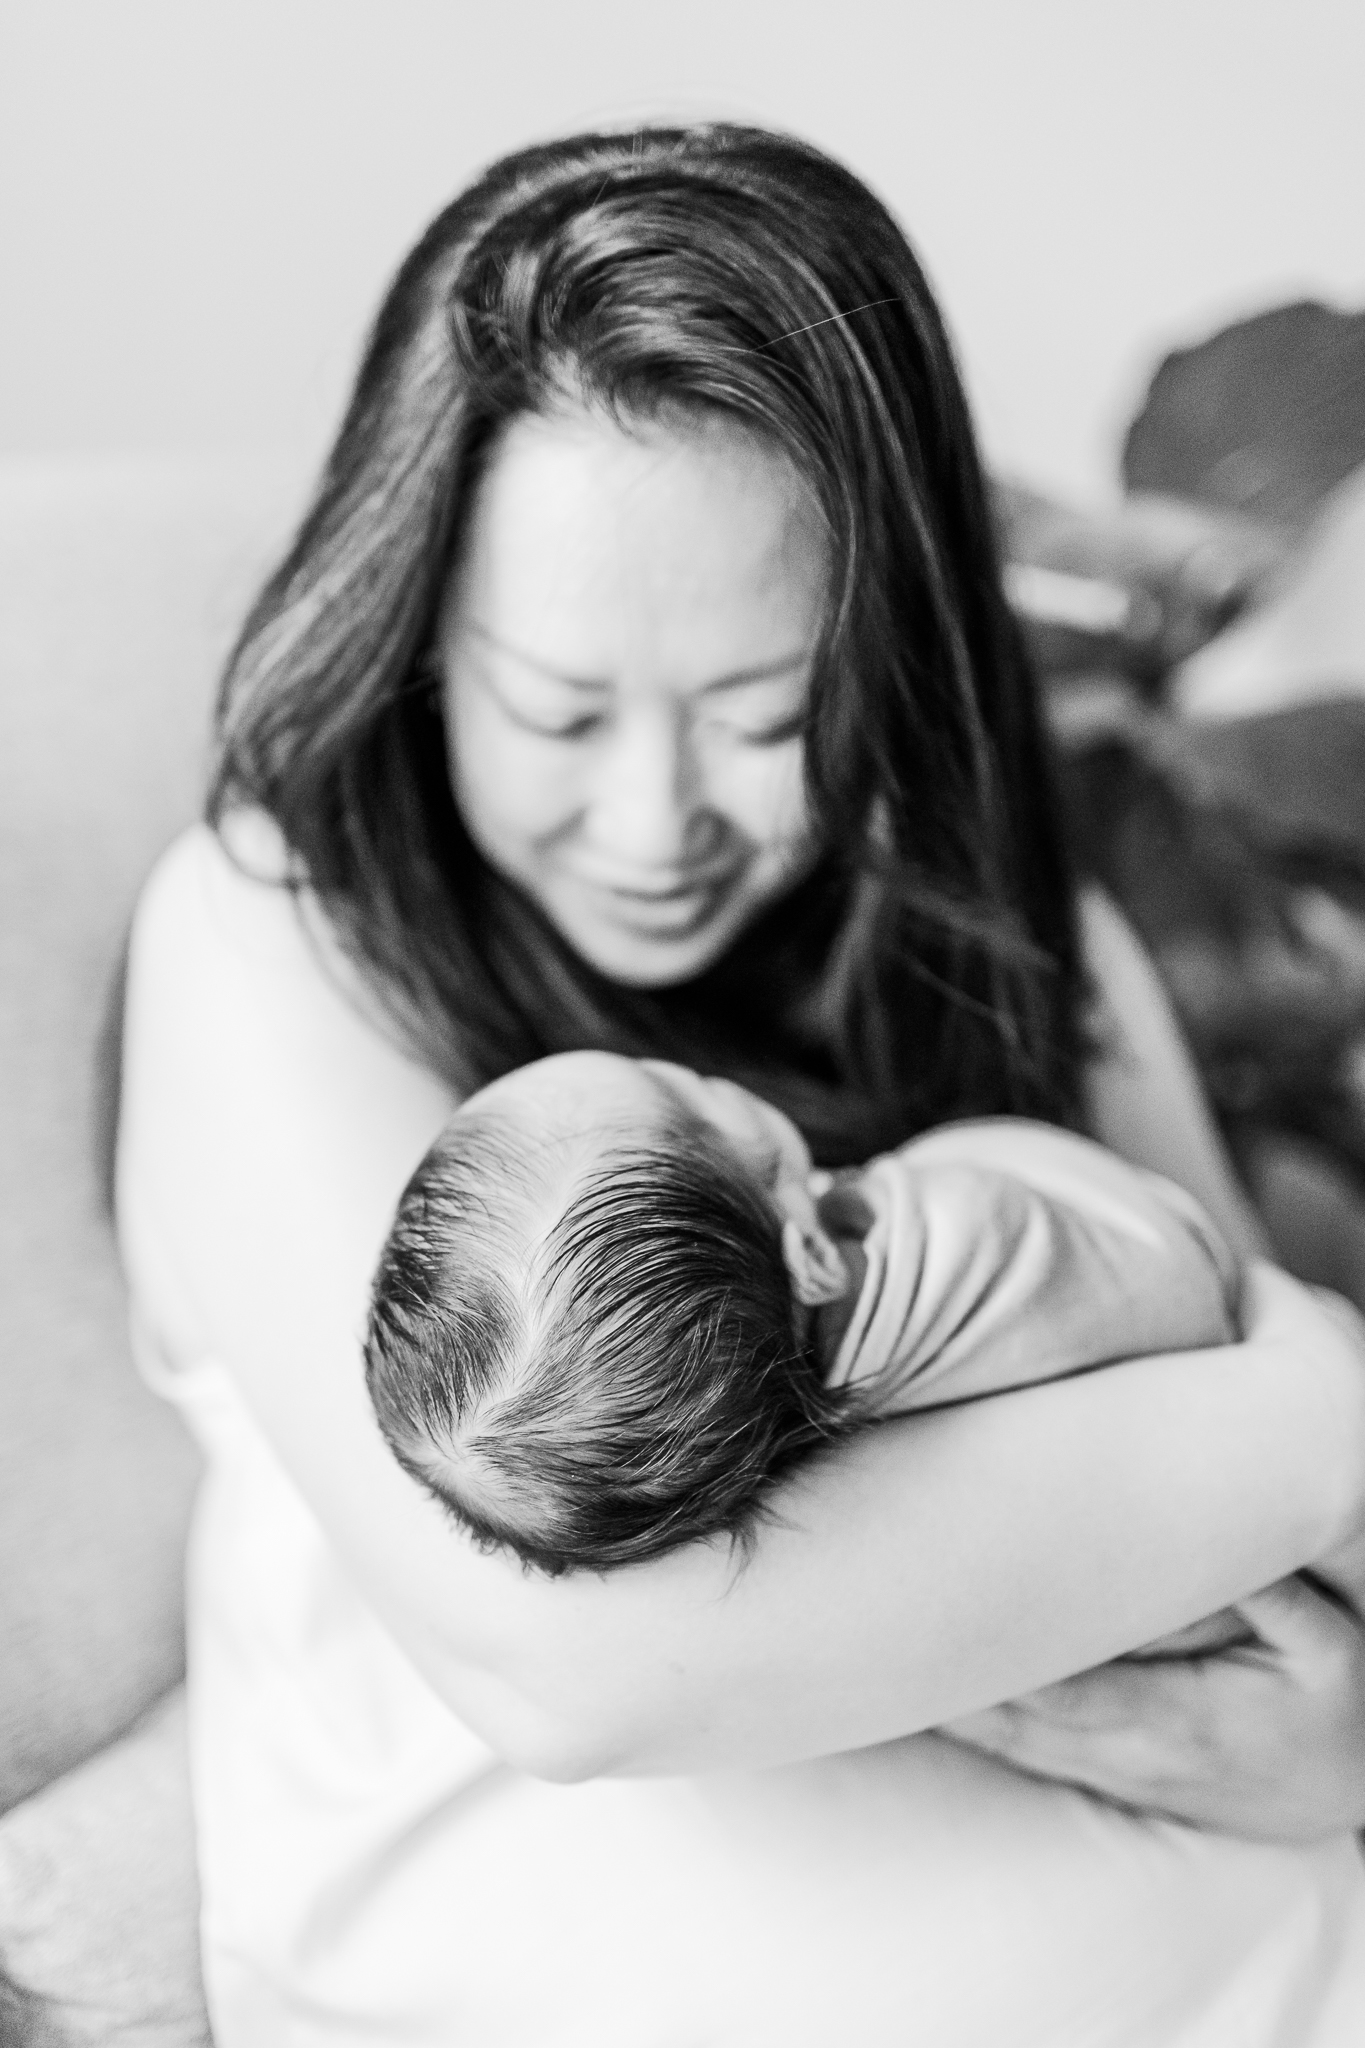 Boston newborn photographer - in-home newborn photo session